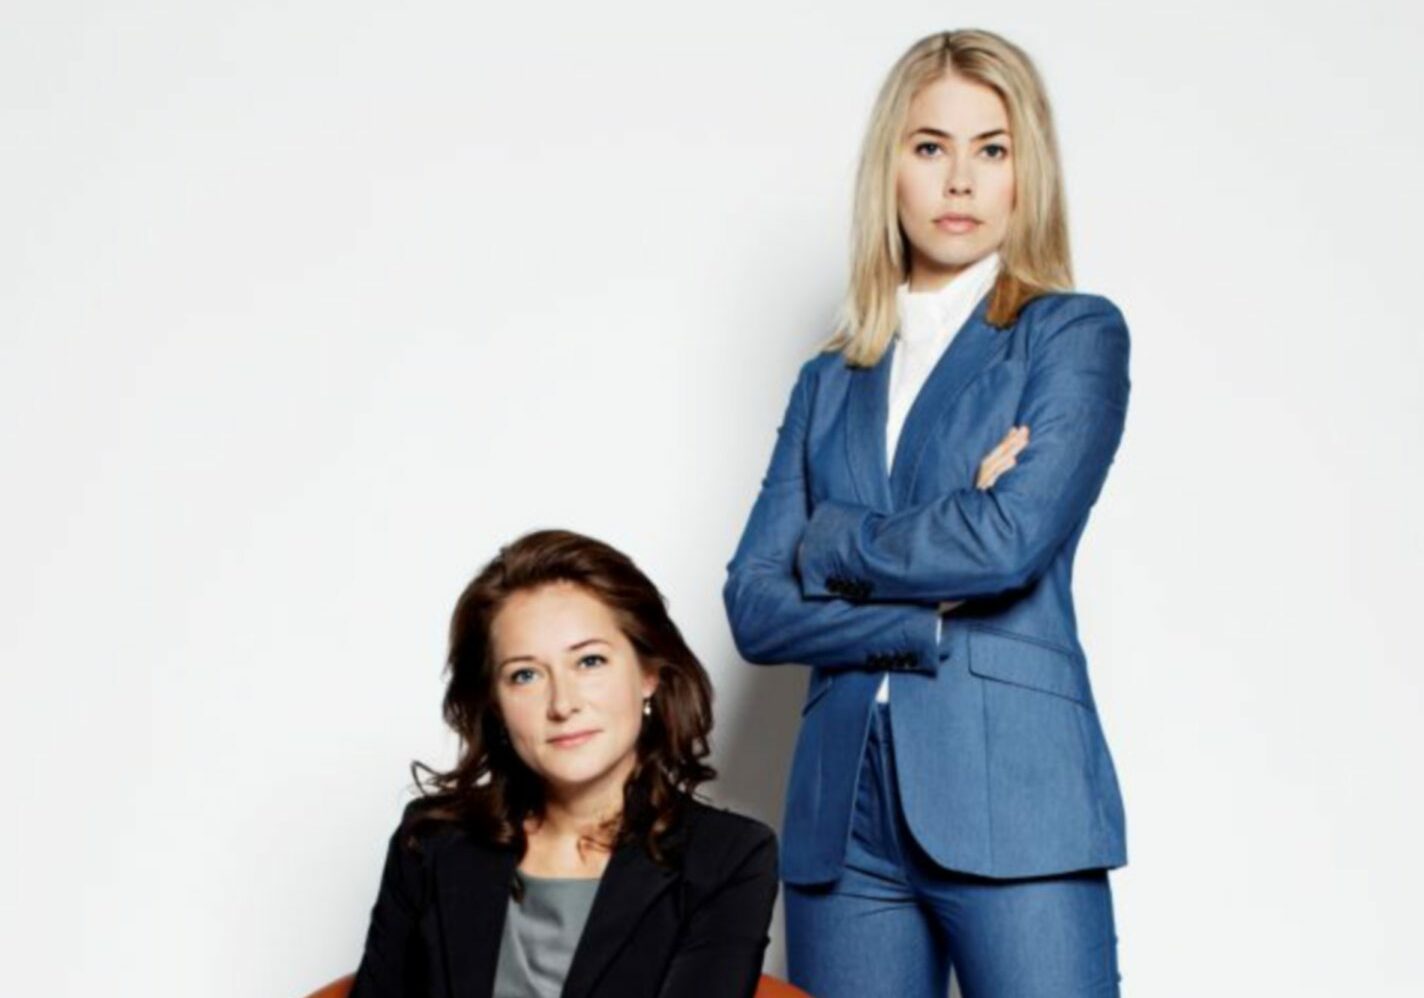 Sidse Babett Knudsen in the new season of Borgen and, right, with co-star Birgitte Hjort Sørensen.